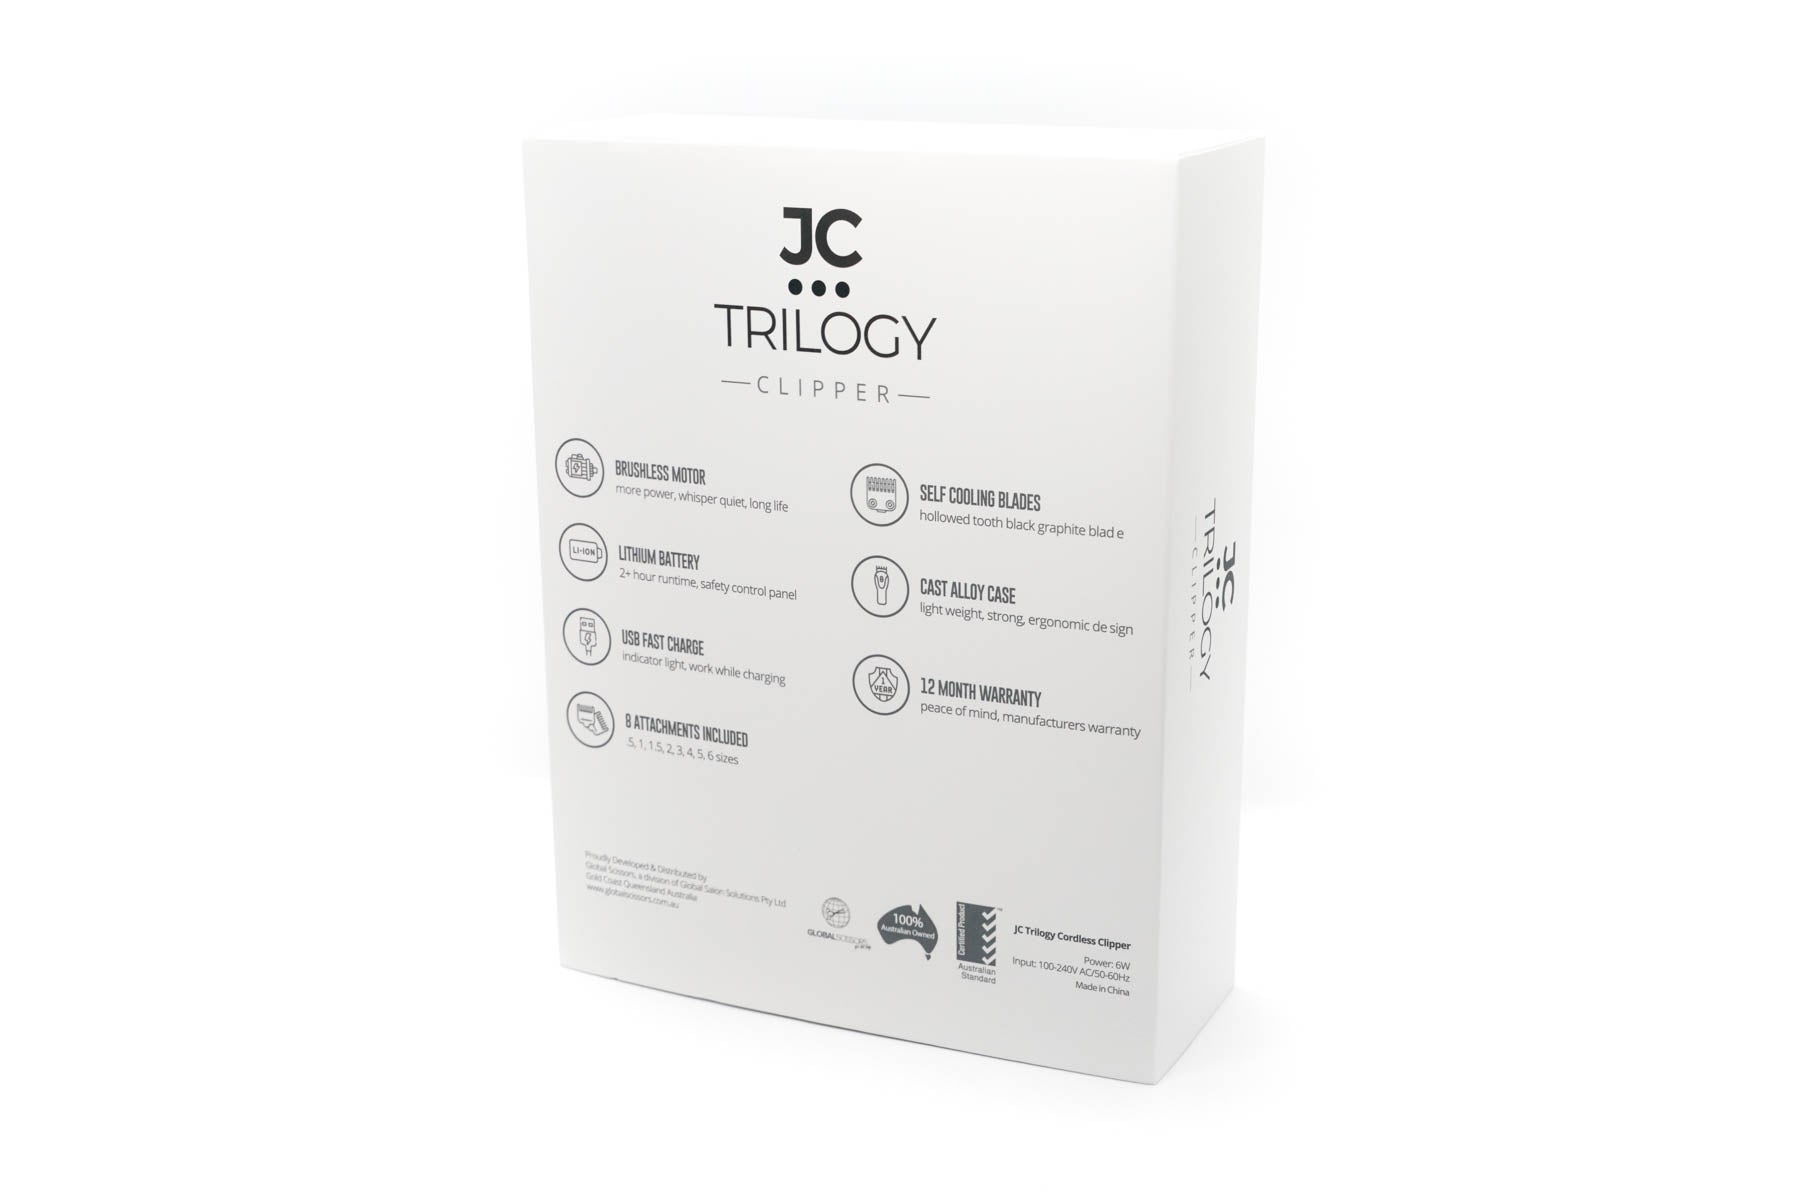 JC TRILOGY CLIPPER Matte Black - Cordless Rechargeable 2-3hr Runtime